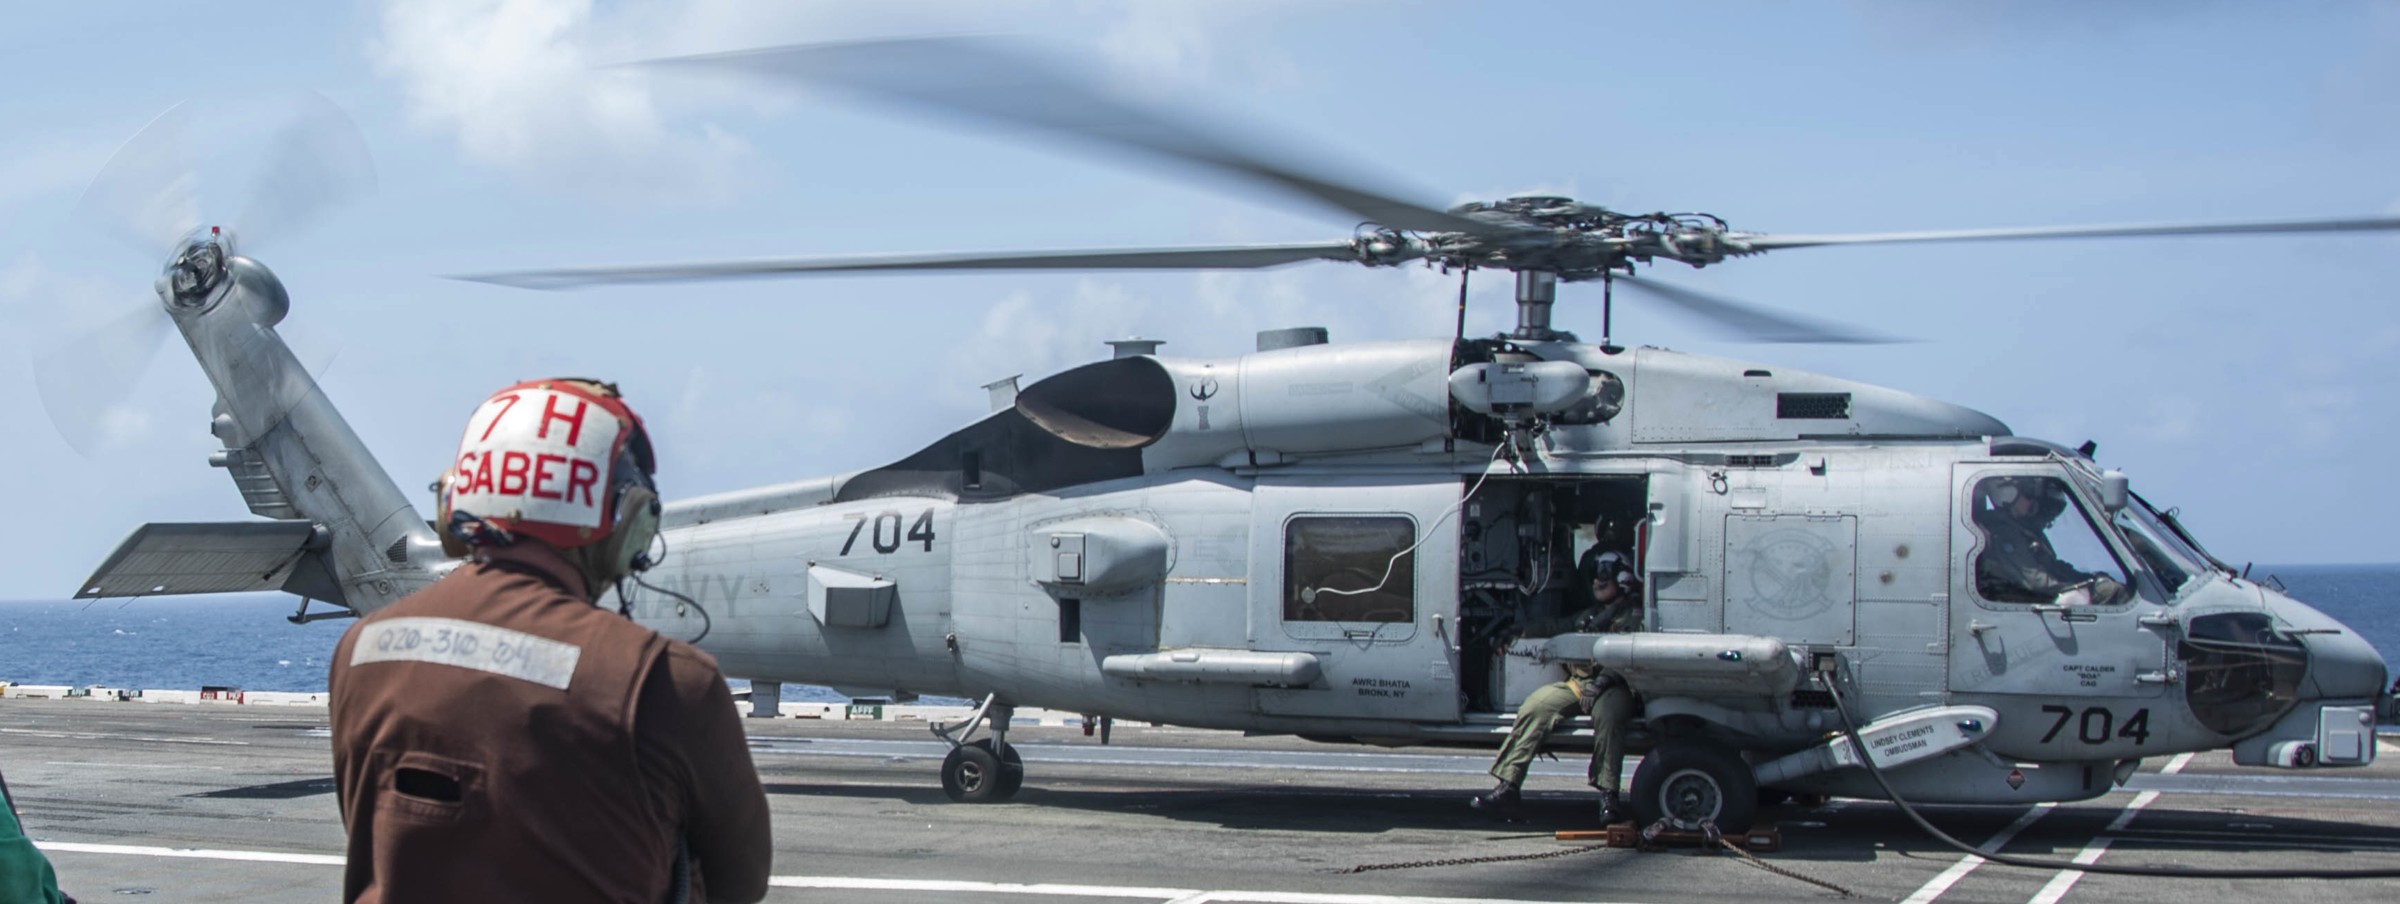 hsm-77 saberhawks helicopter maritime strike squadron mh-60r seahawk cvw-5 cvn-76 uss ronald reagan 78